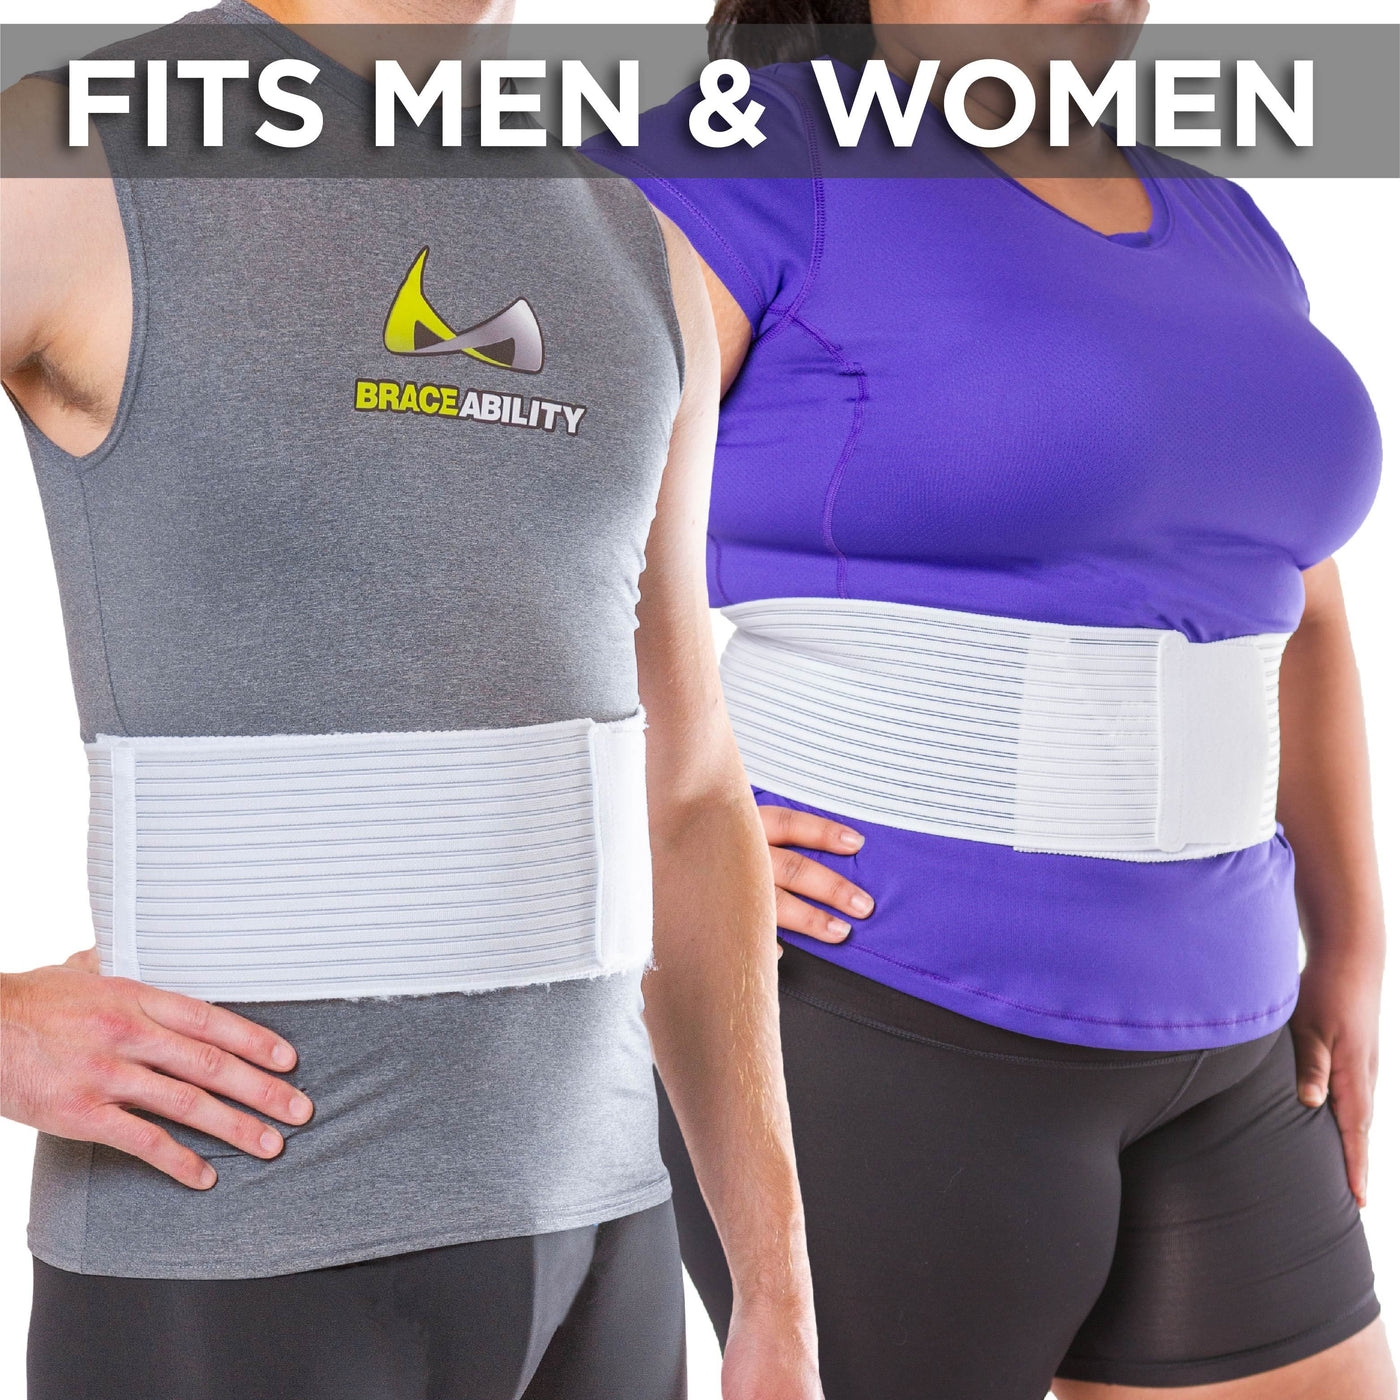 the hernia belt fits men and women